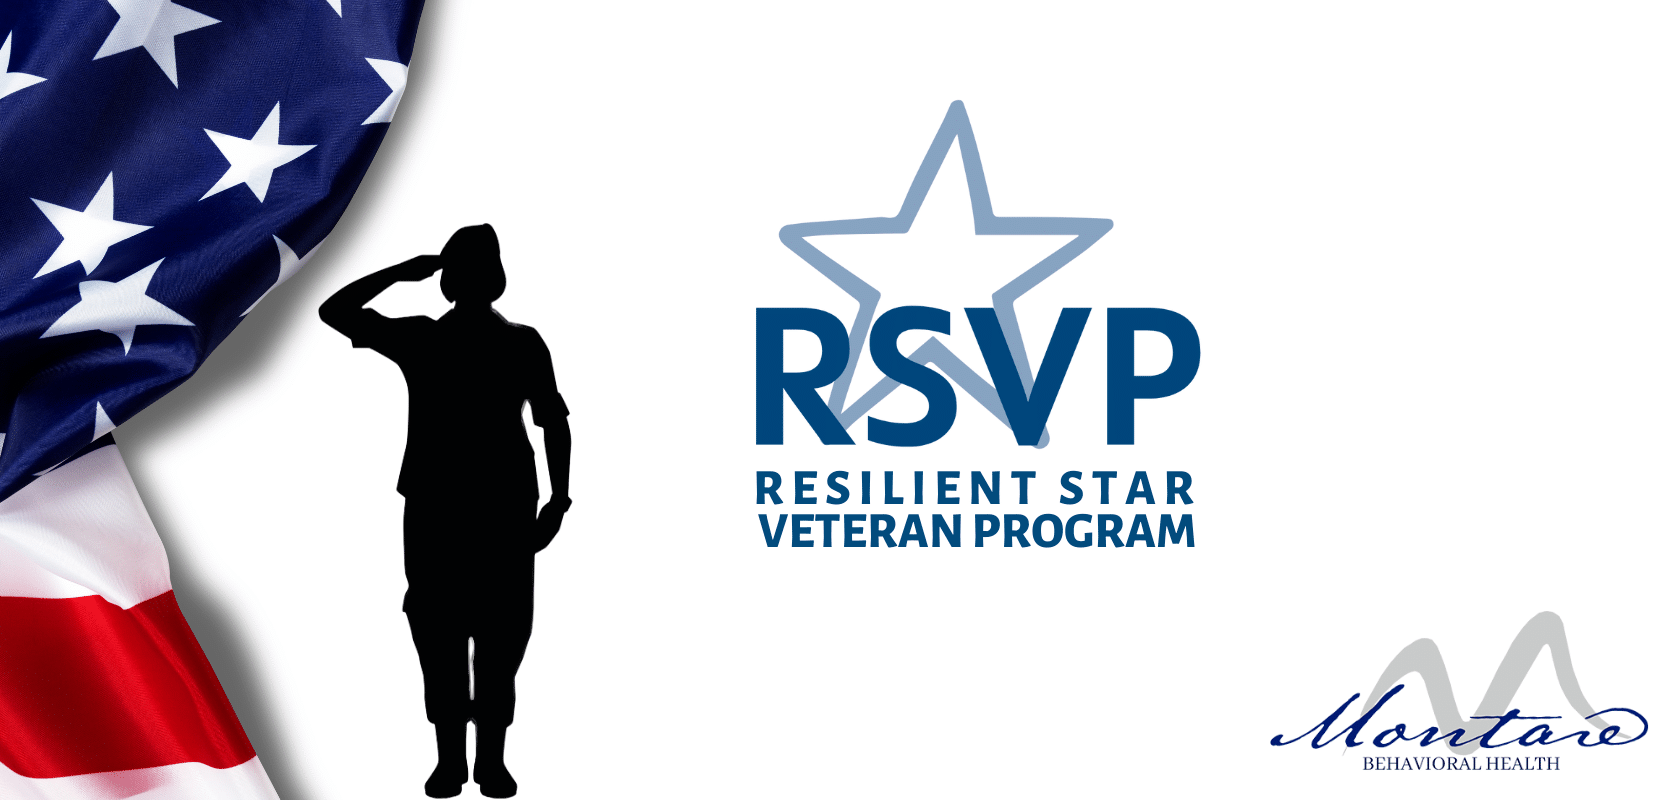 Resilient Star Veteran Program for Mental Health Treatment in Southern California